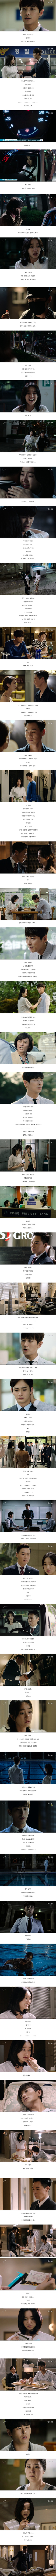 episode 9 captures for the Korean drama 'Mask'